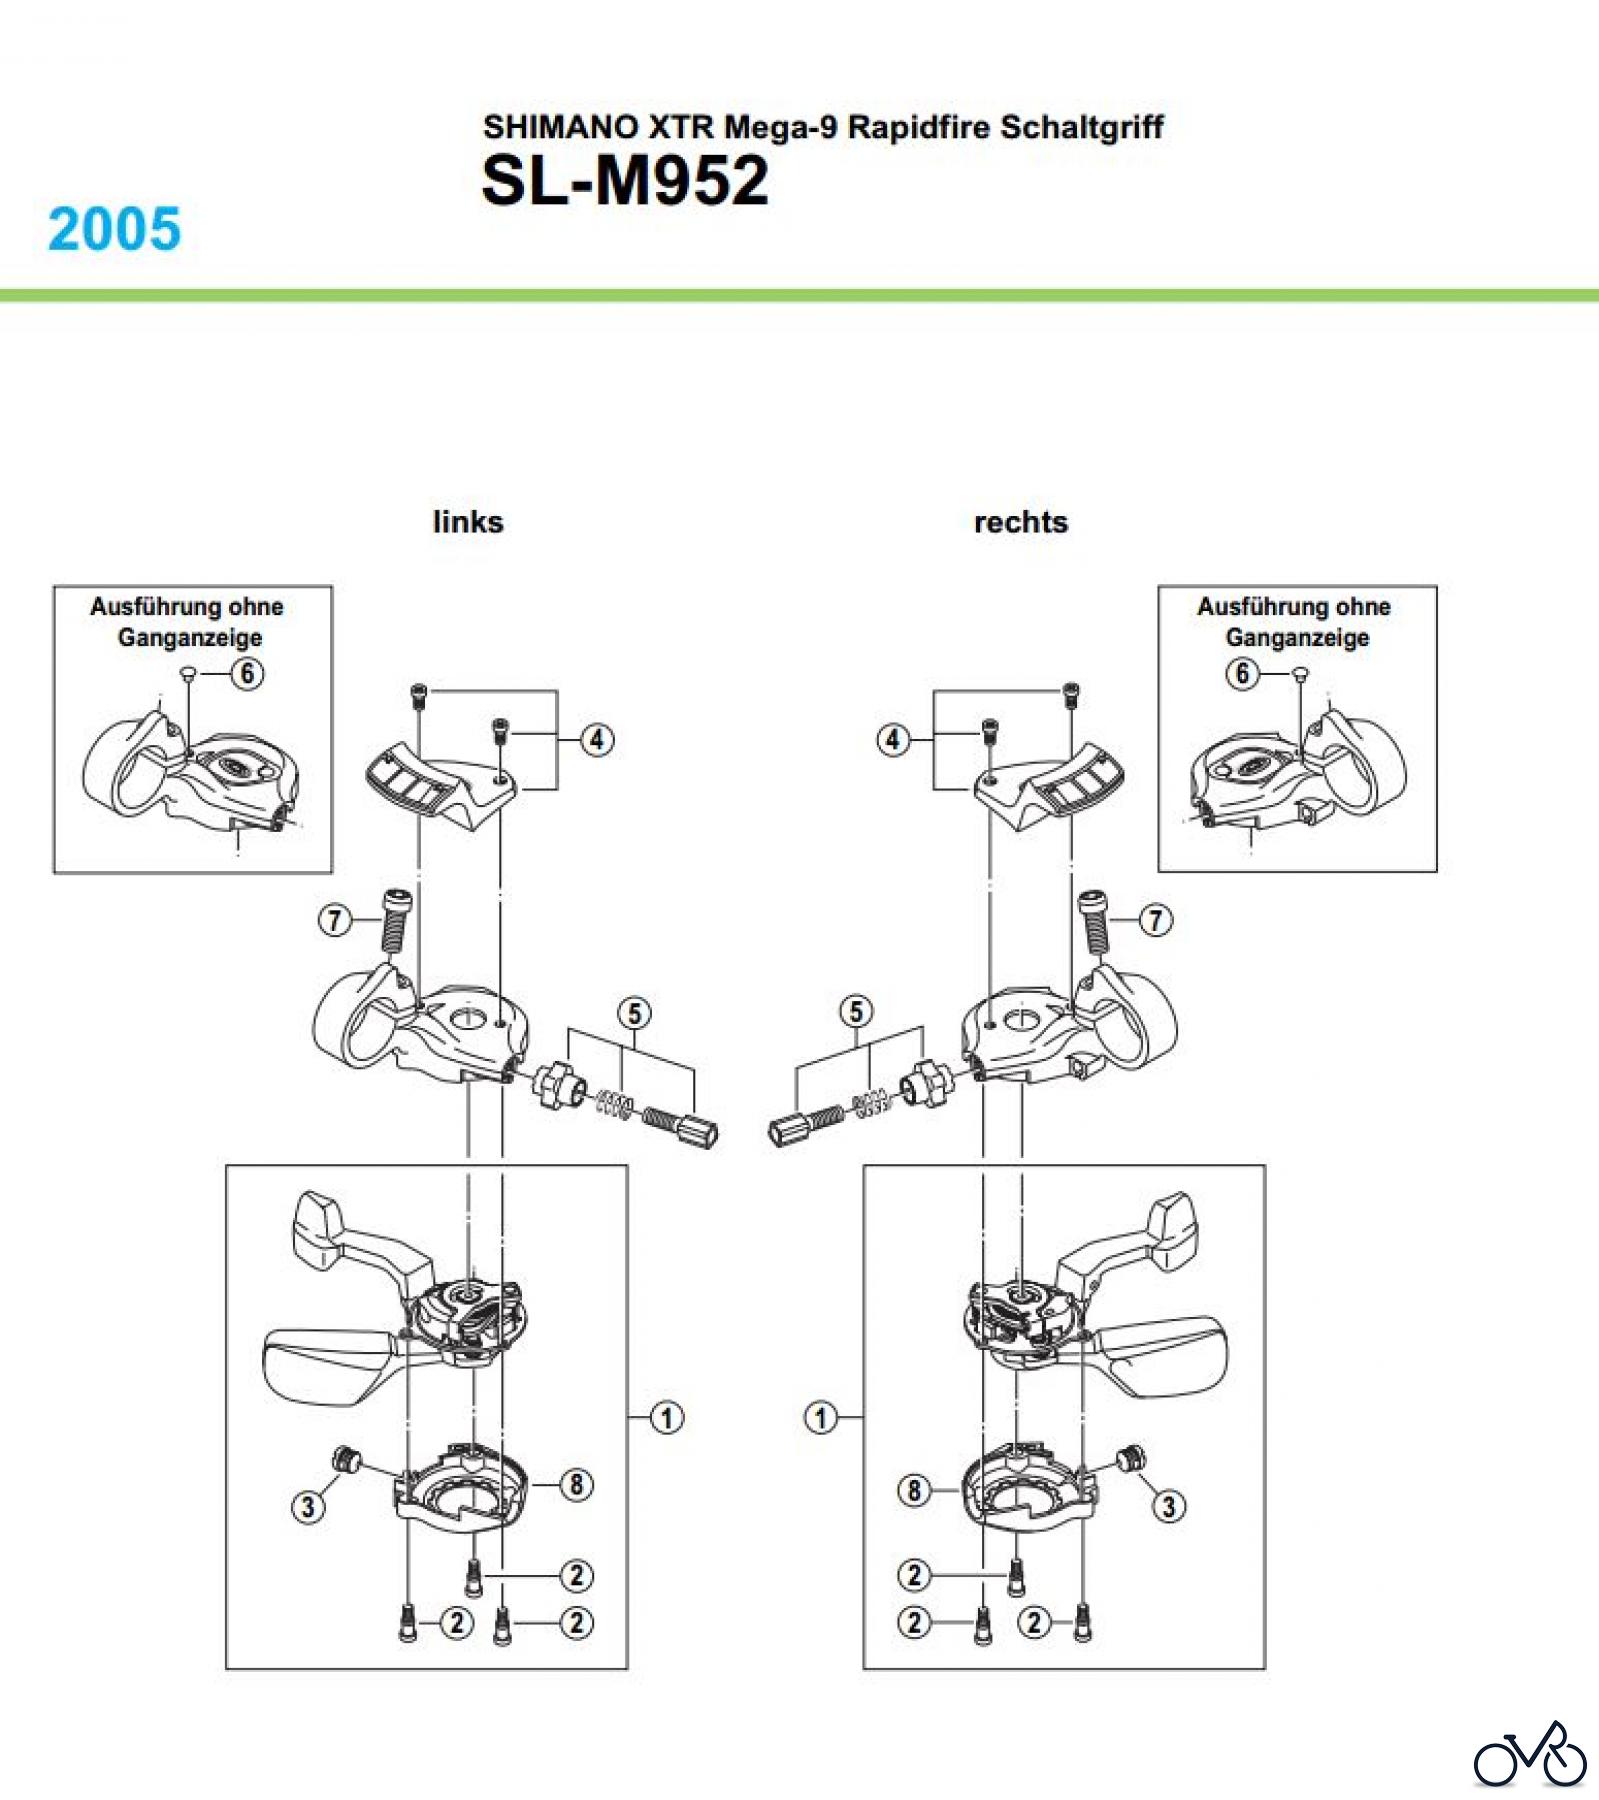  Shimano SL Shift Lever - Schalthebel SL-M952, 2005 SHIMANO XTR Mega-9 Rapidfire Schaltgriff